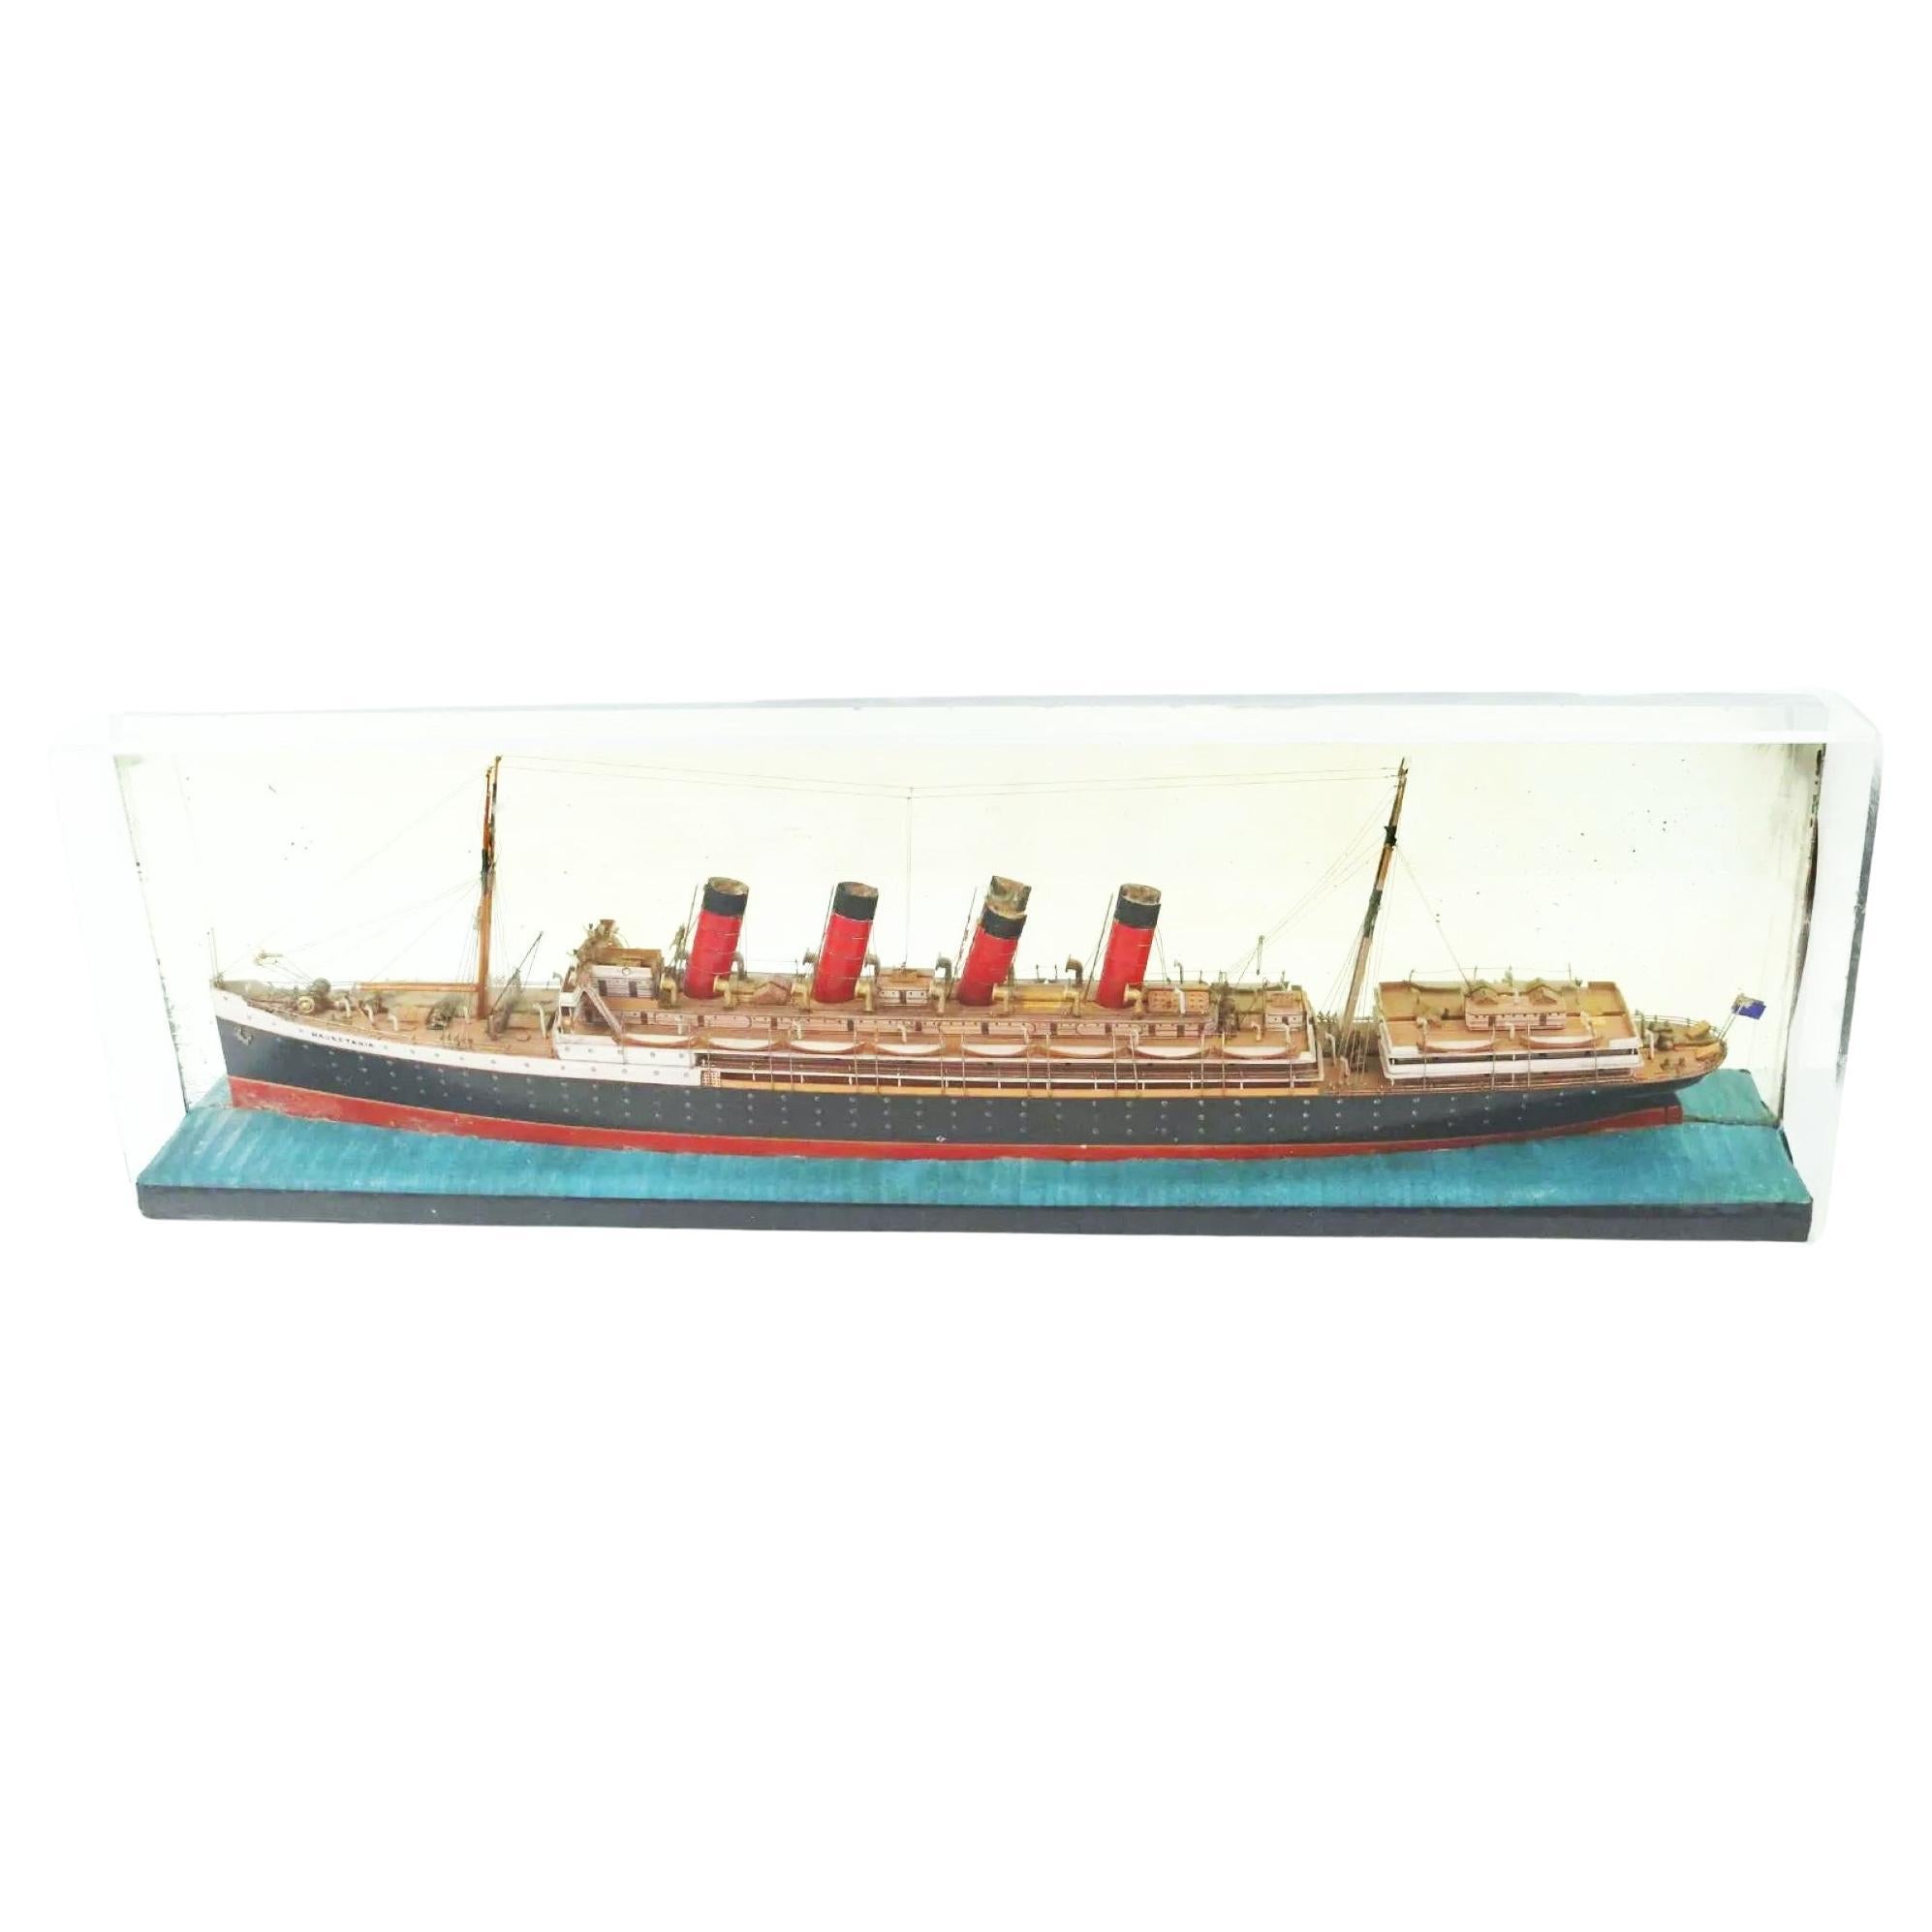 Half-model of Ocean Liner “Mauretania”